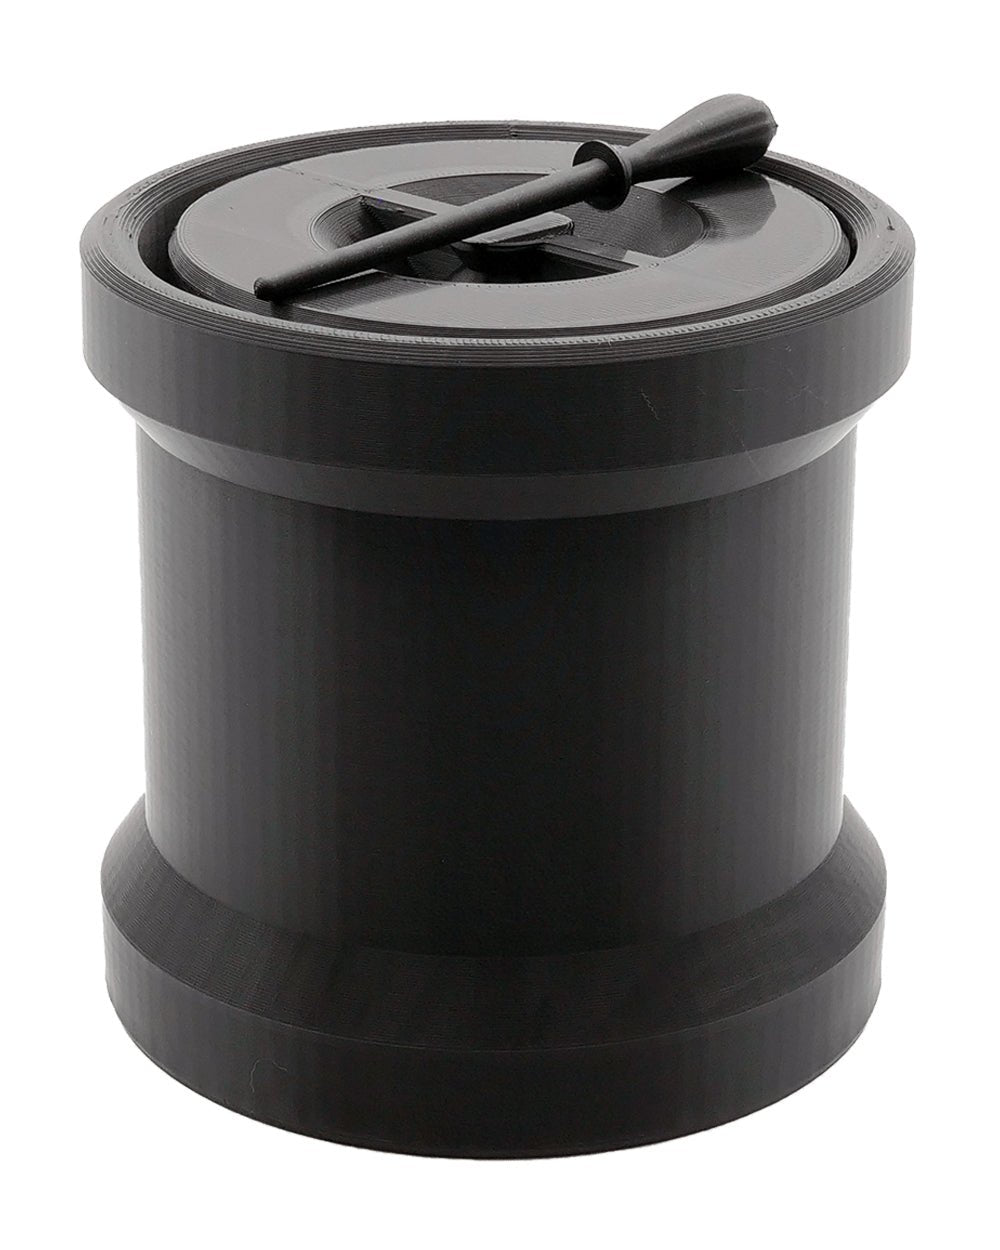 HUMBOLDT | Black Pre-Rolled Cones Filling Machine Starter Kit 109mm | Fill 55 Cones Per Run - 2